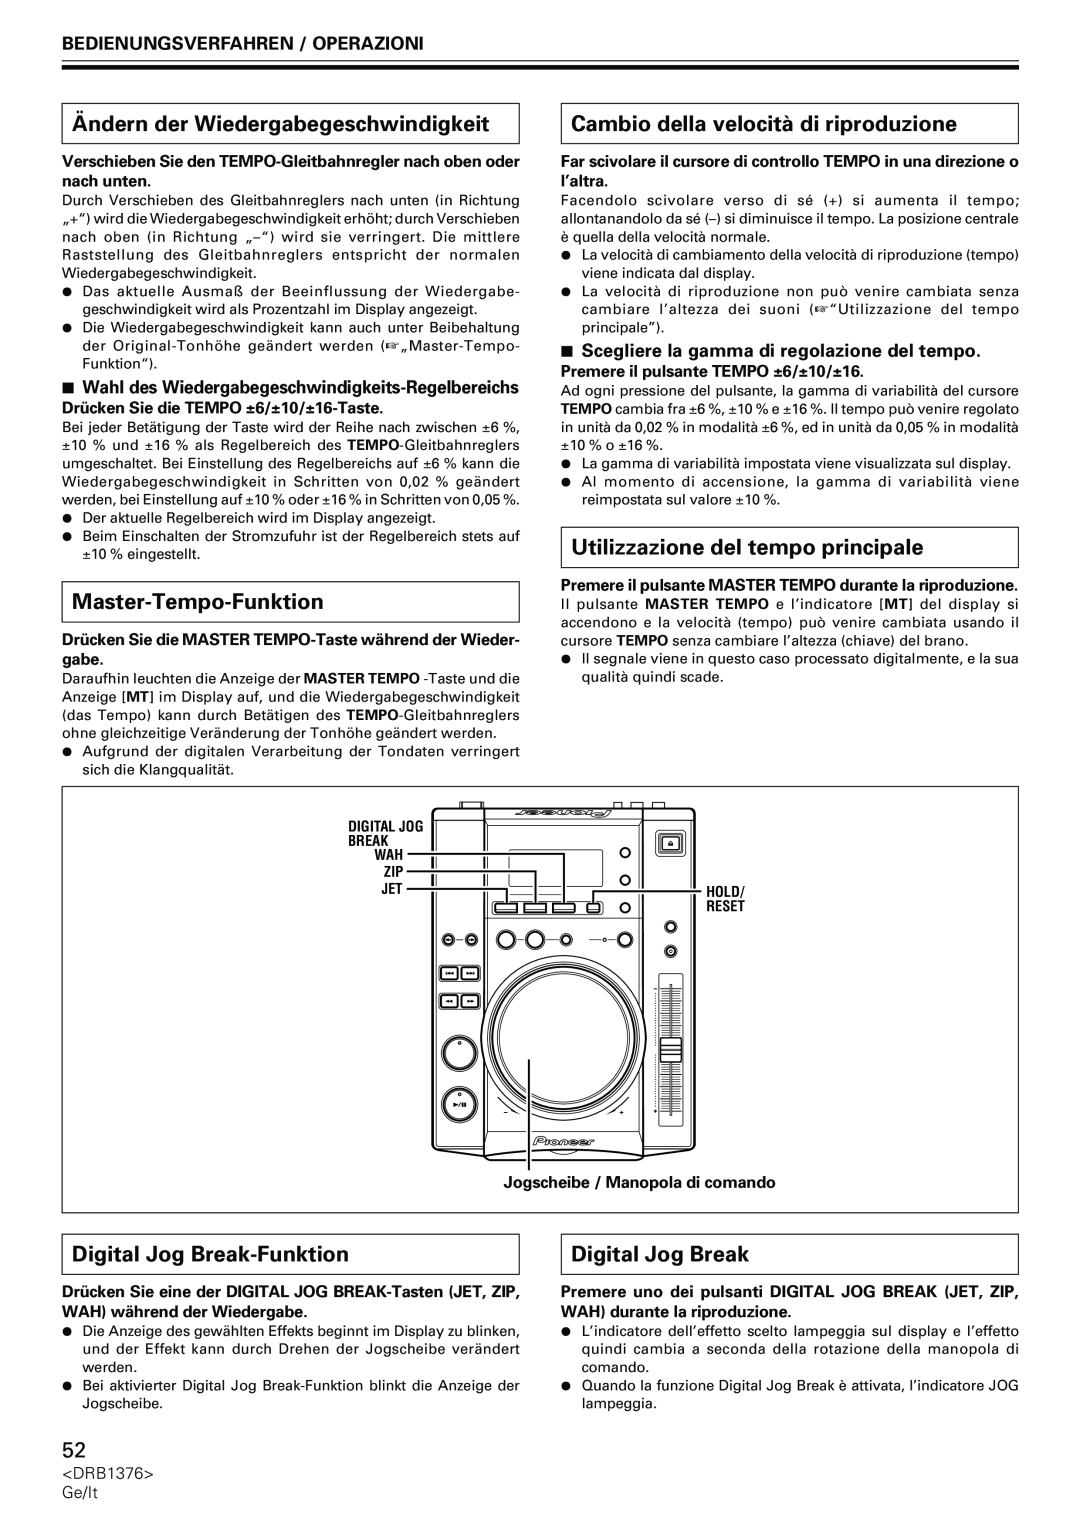 Pioneer CDJ-200 manual Ändern der Wiedergabegeschwindigkeit, Cambio della velocità di riproduzione, Master-Tempo-Funktion 